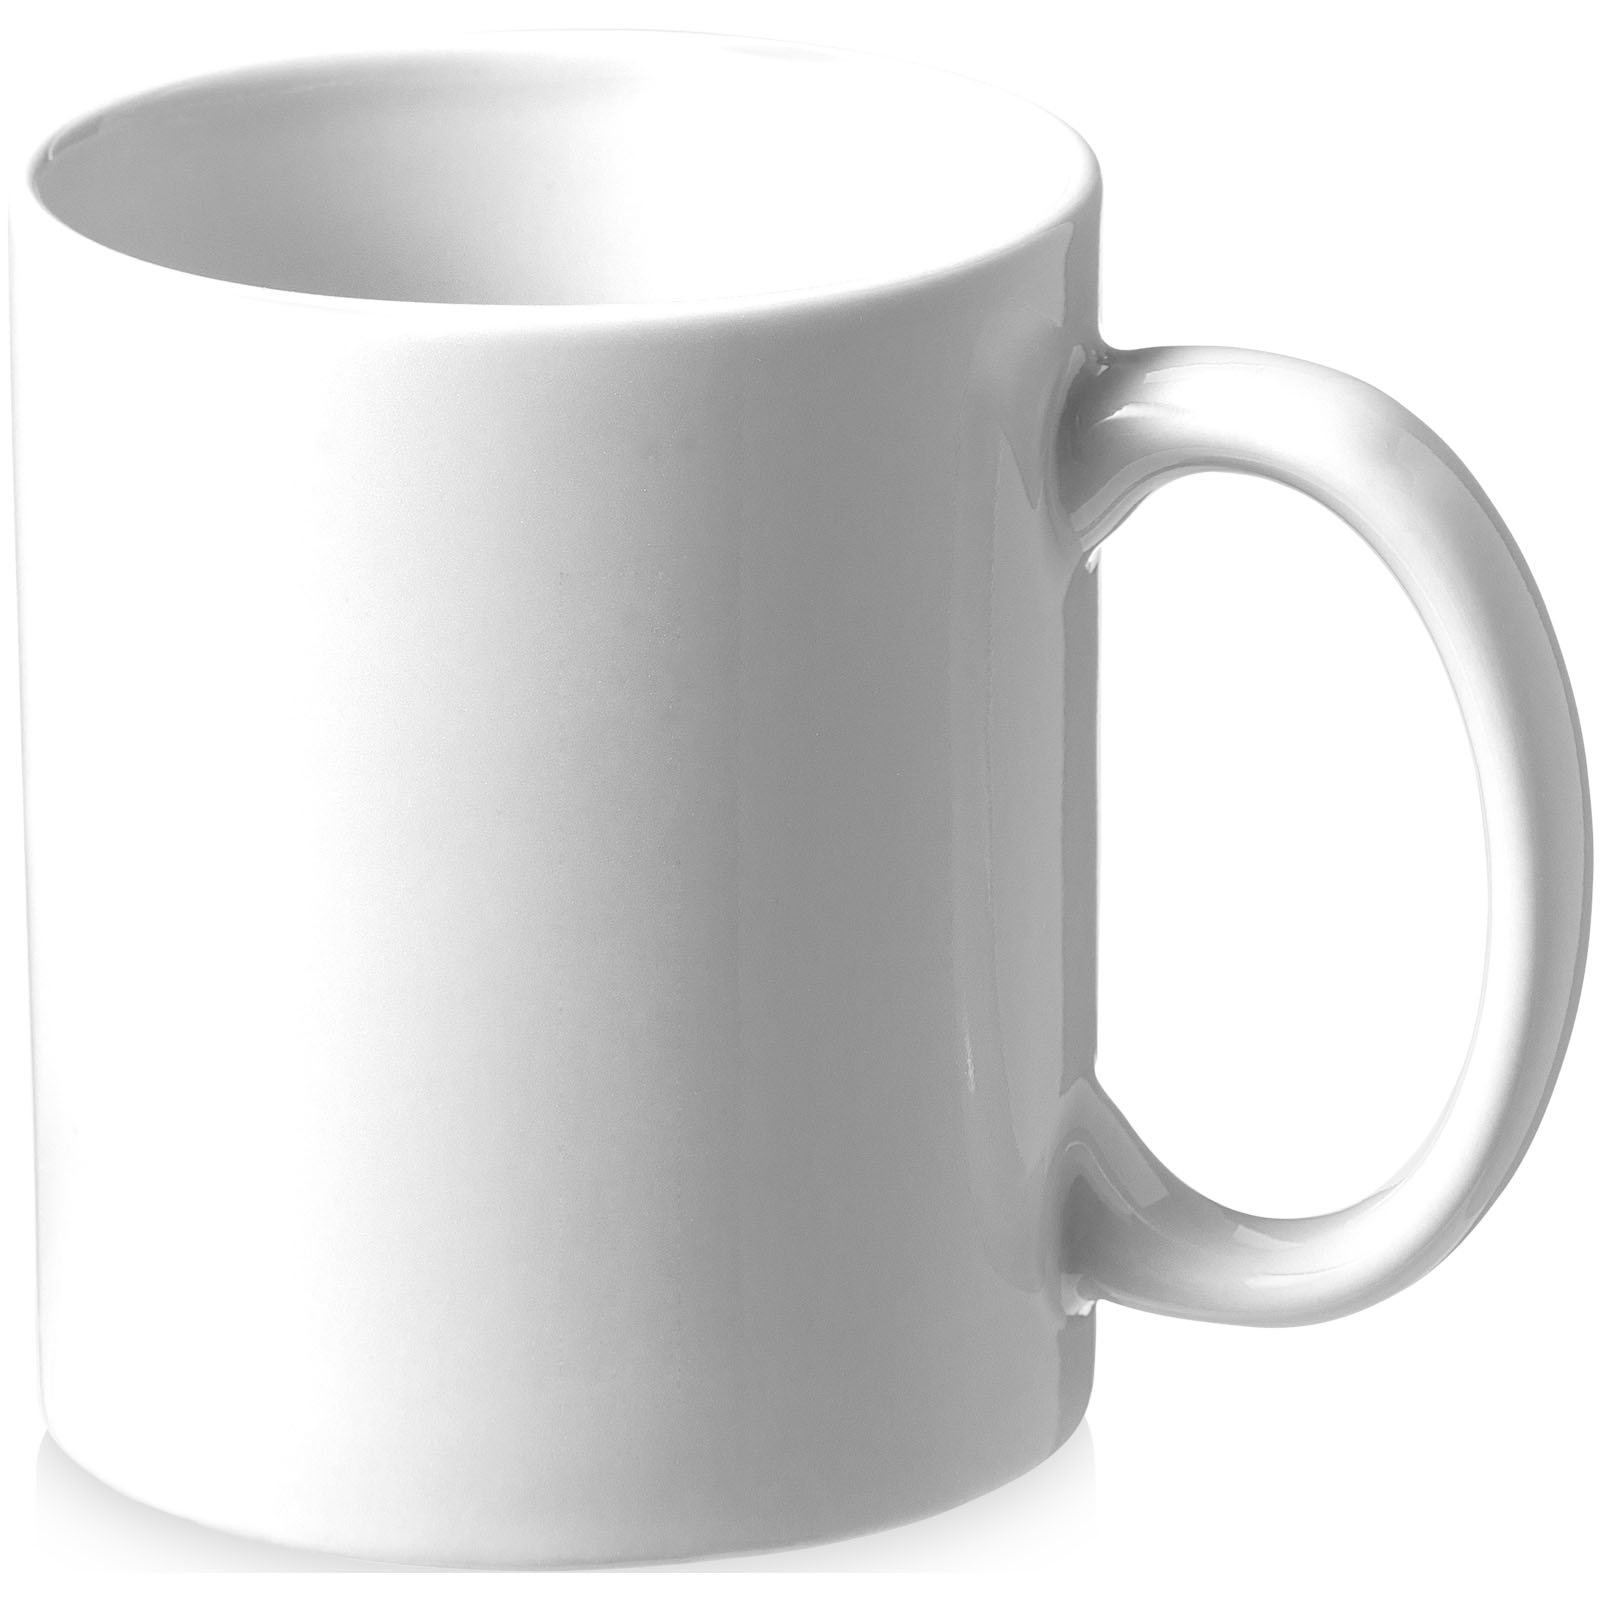 Standard mugs - Pic 330 ml ceramic sublimation mug